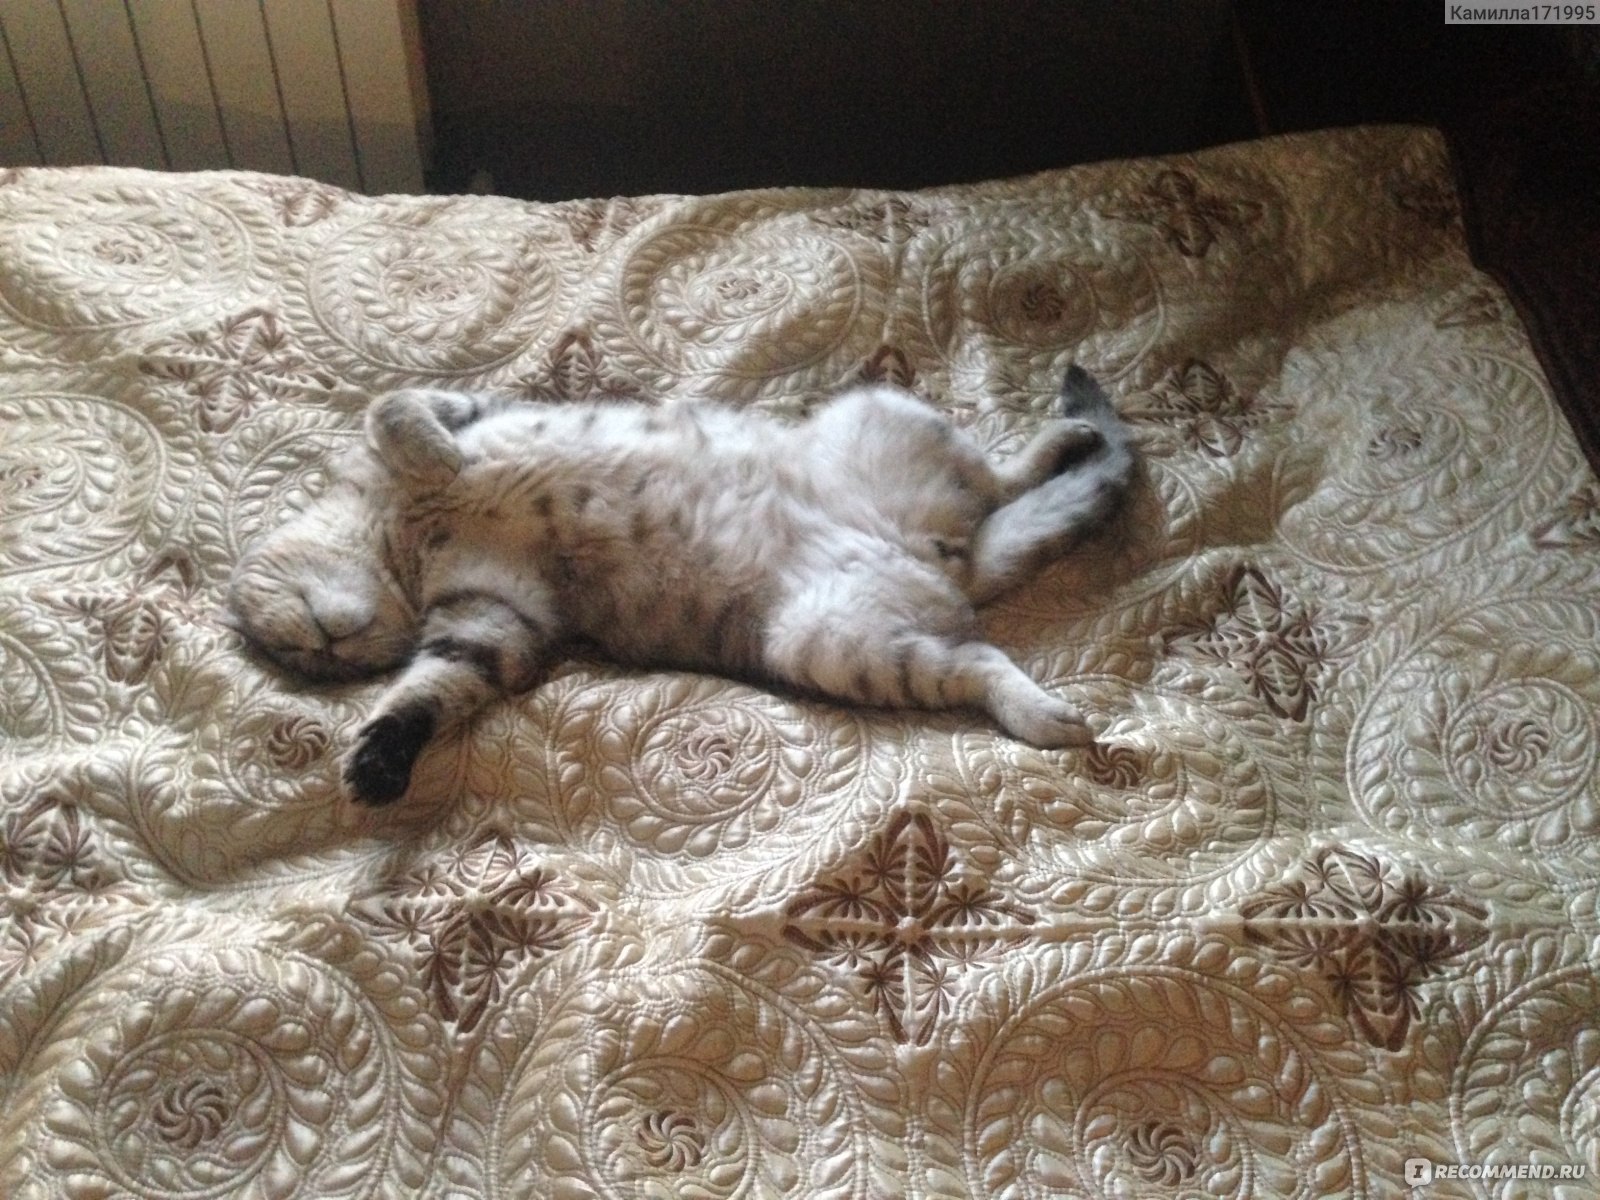 Кот развалился на кровати